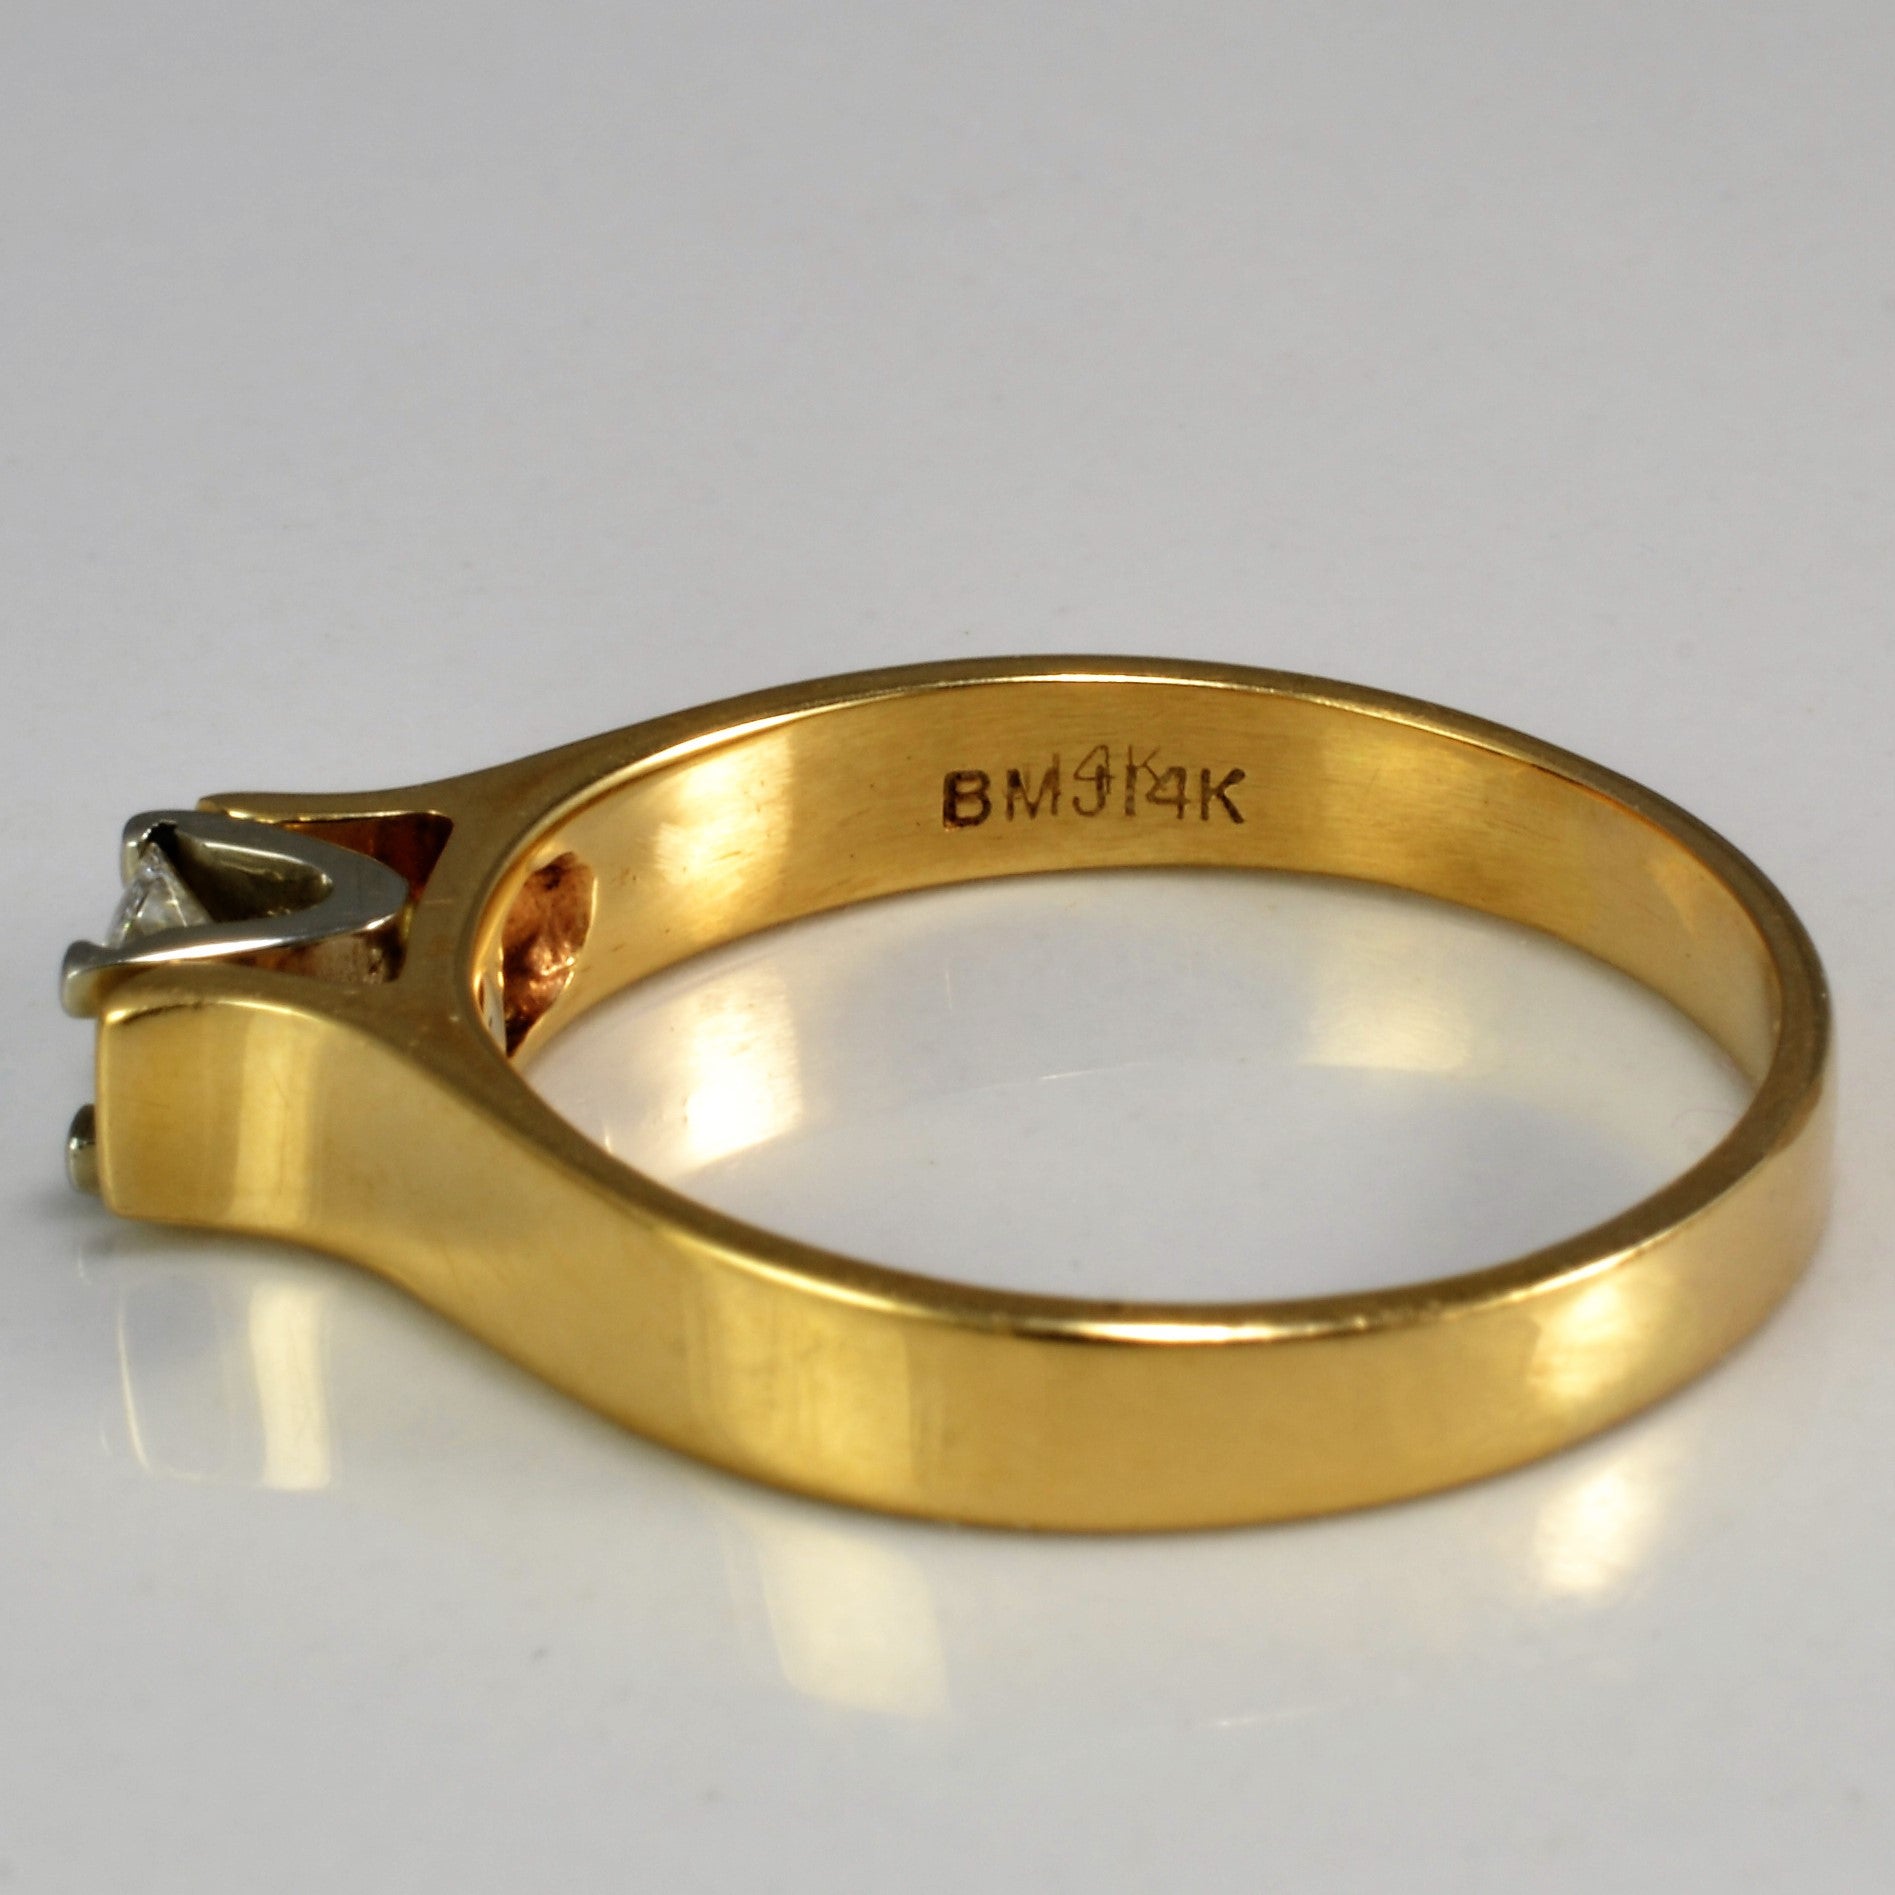 Solitaire Princess Diamond Engagement Ring | 0.26 ct, SZ 7.75 |